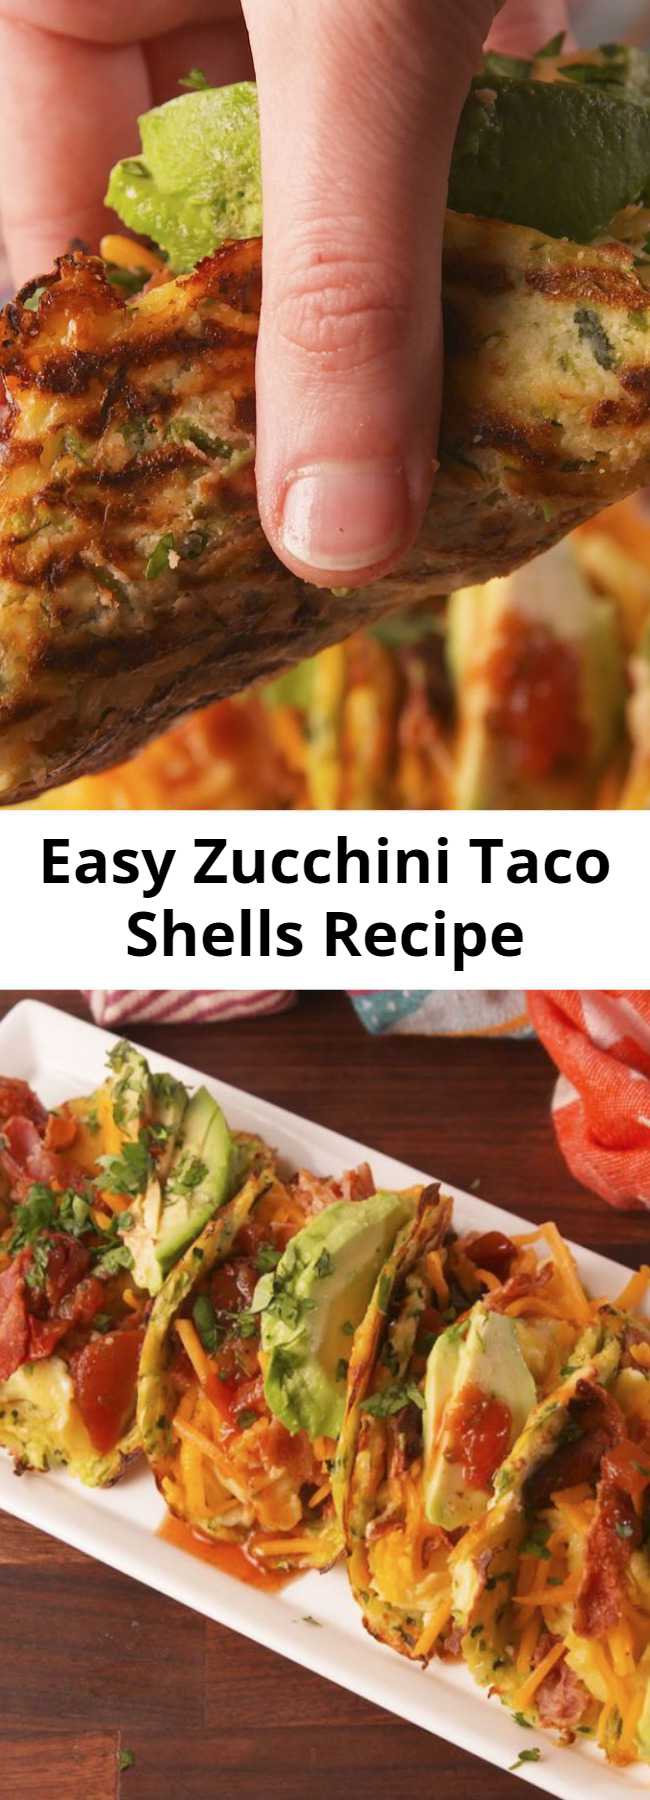 Easy Zucchini Taco Shells Recipe - Turn zucchini into taco shells for your next taco night. #easy #recipe #healthy #zucchini #taco #tacoshells #diet #lowcarb #lowcarbdiet